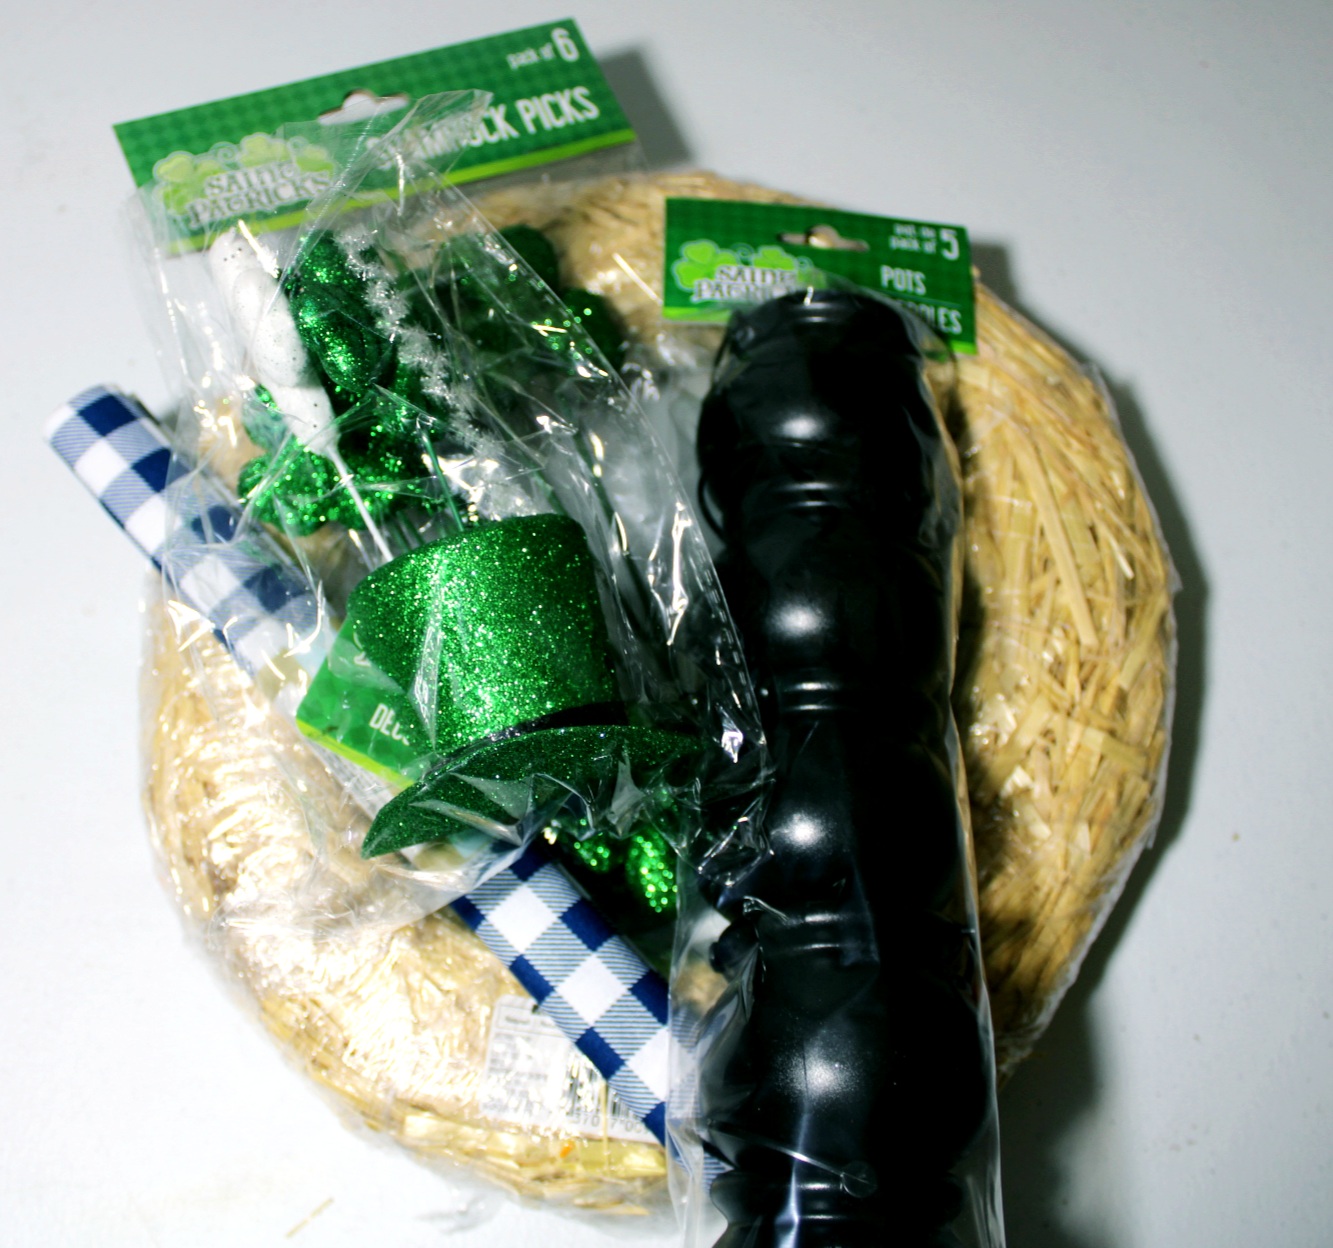 St. Patrick's Day wreath supplies: buffalo check fabric, straw wreath form, shamrock picks, and hat pick.